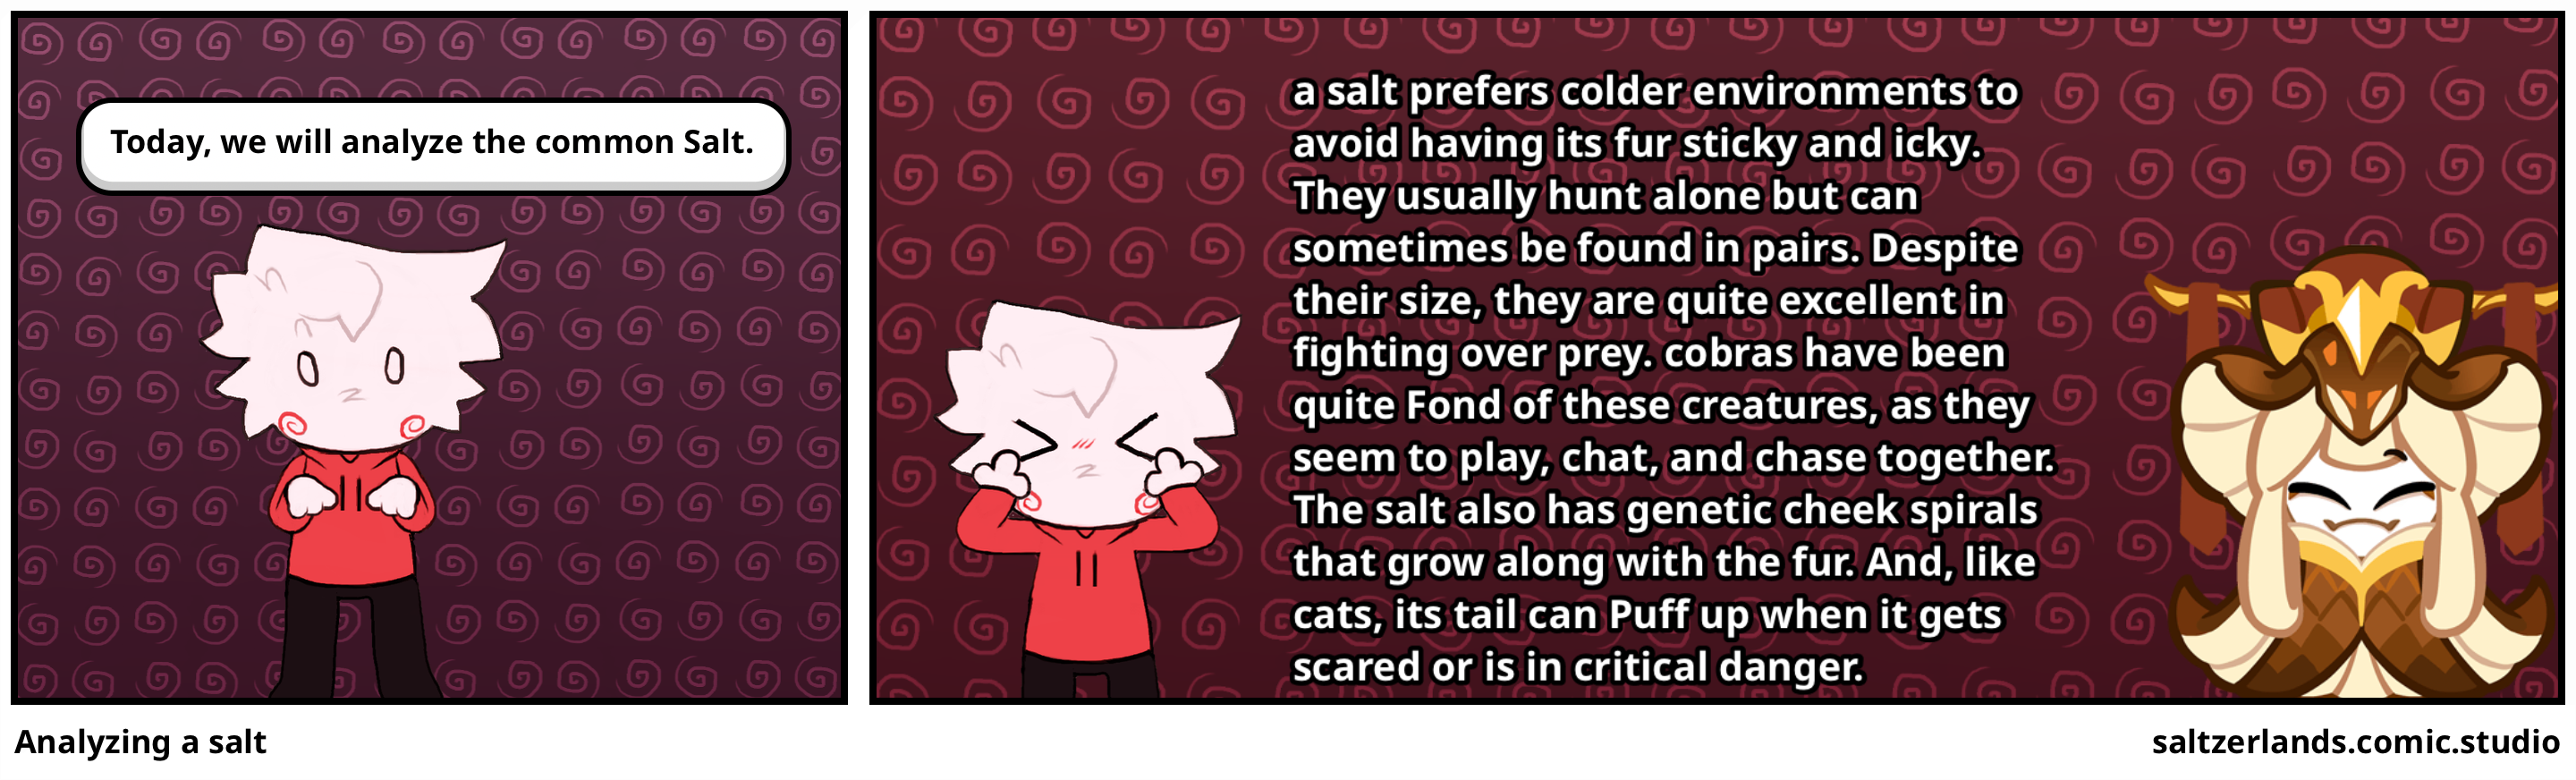 Analyzing a salt